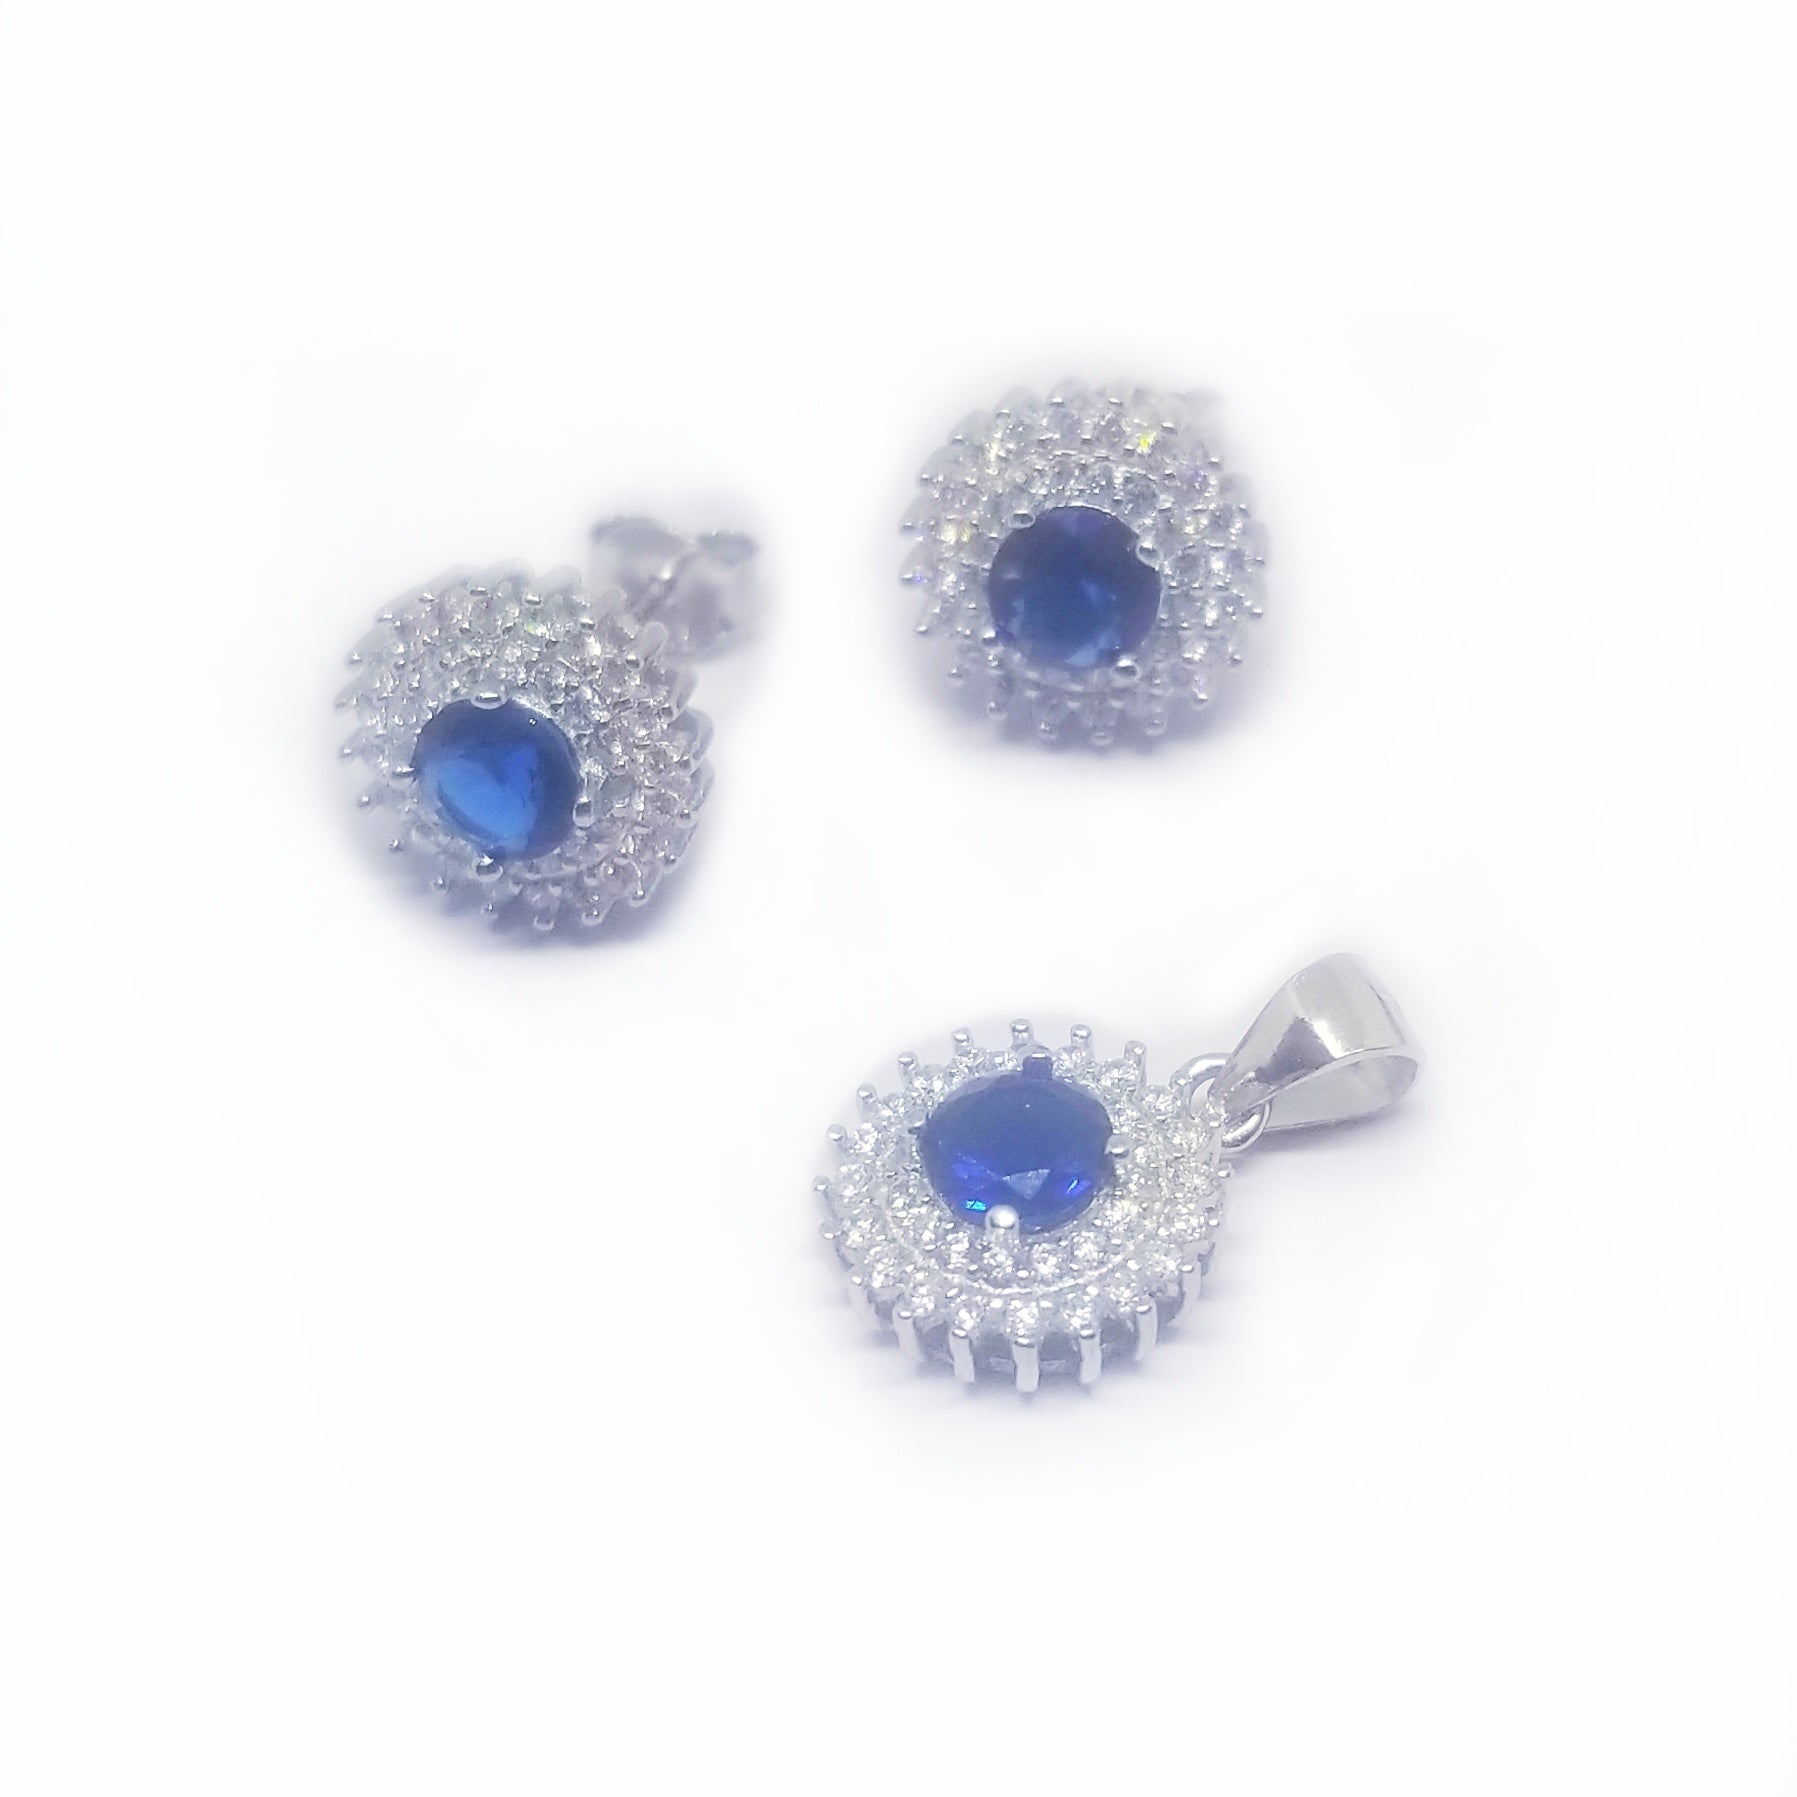 Blue sapphire cz earrings and pendant set